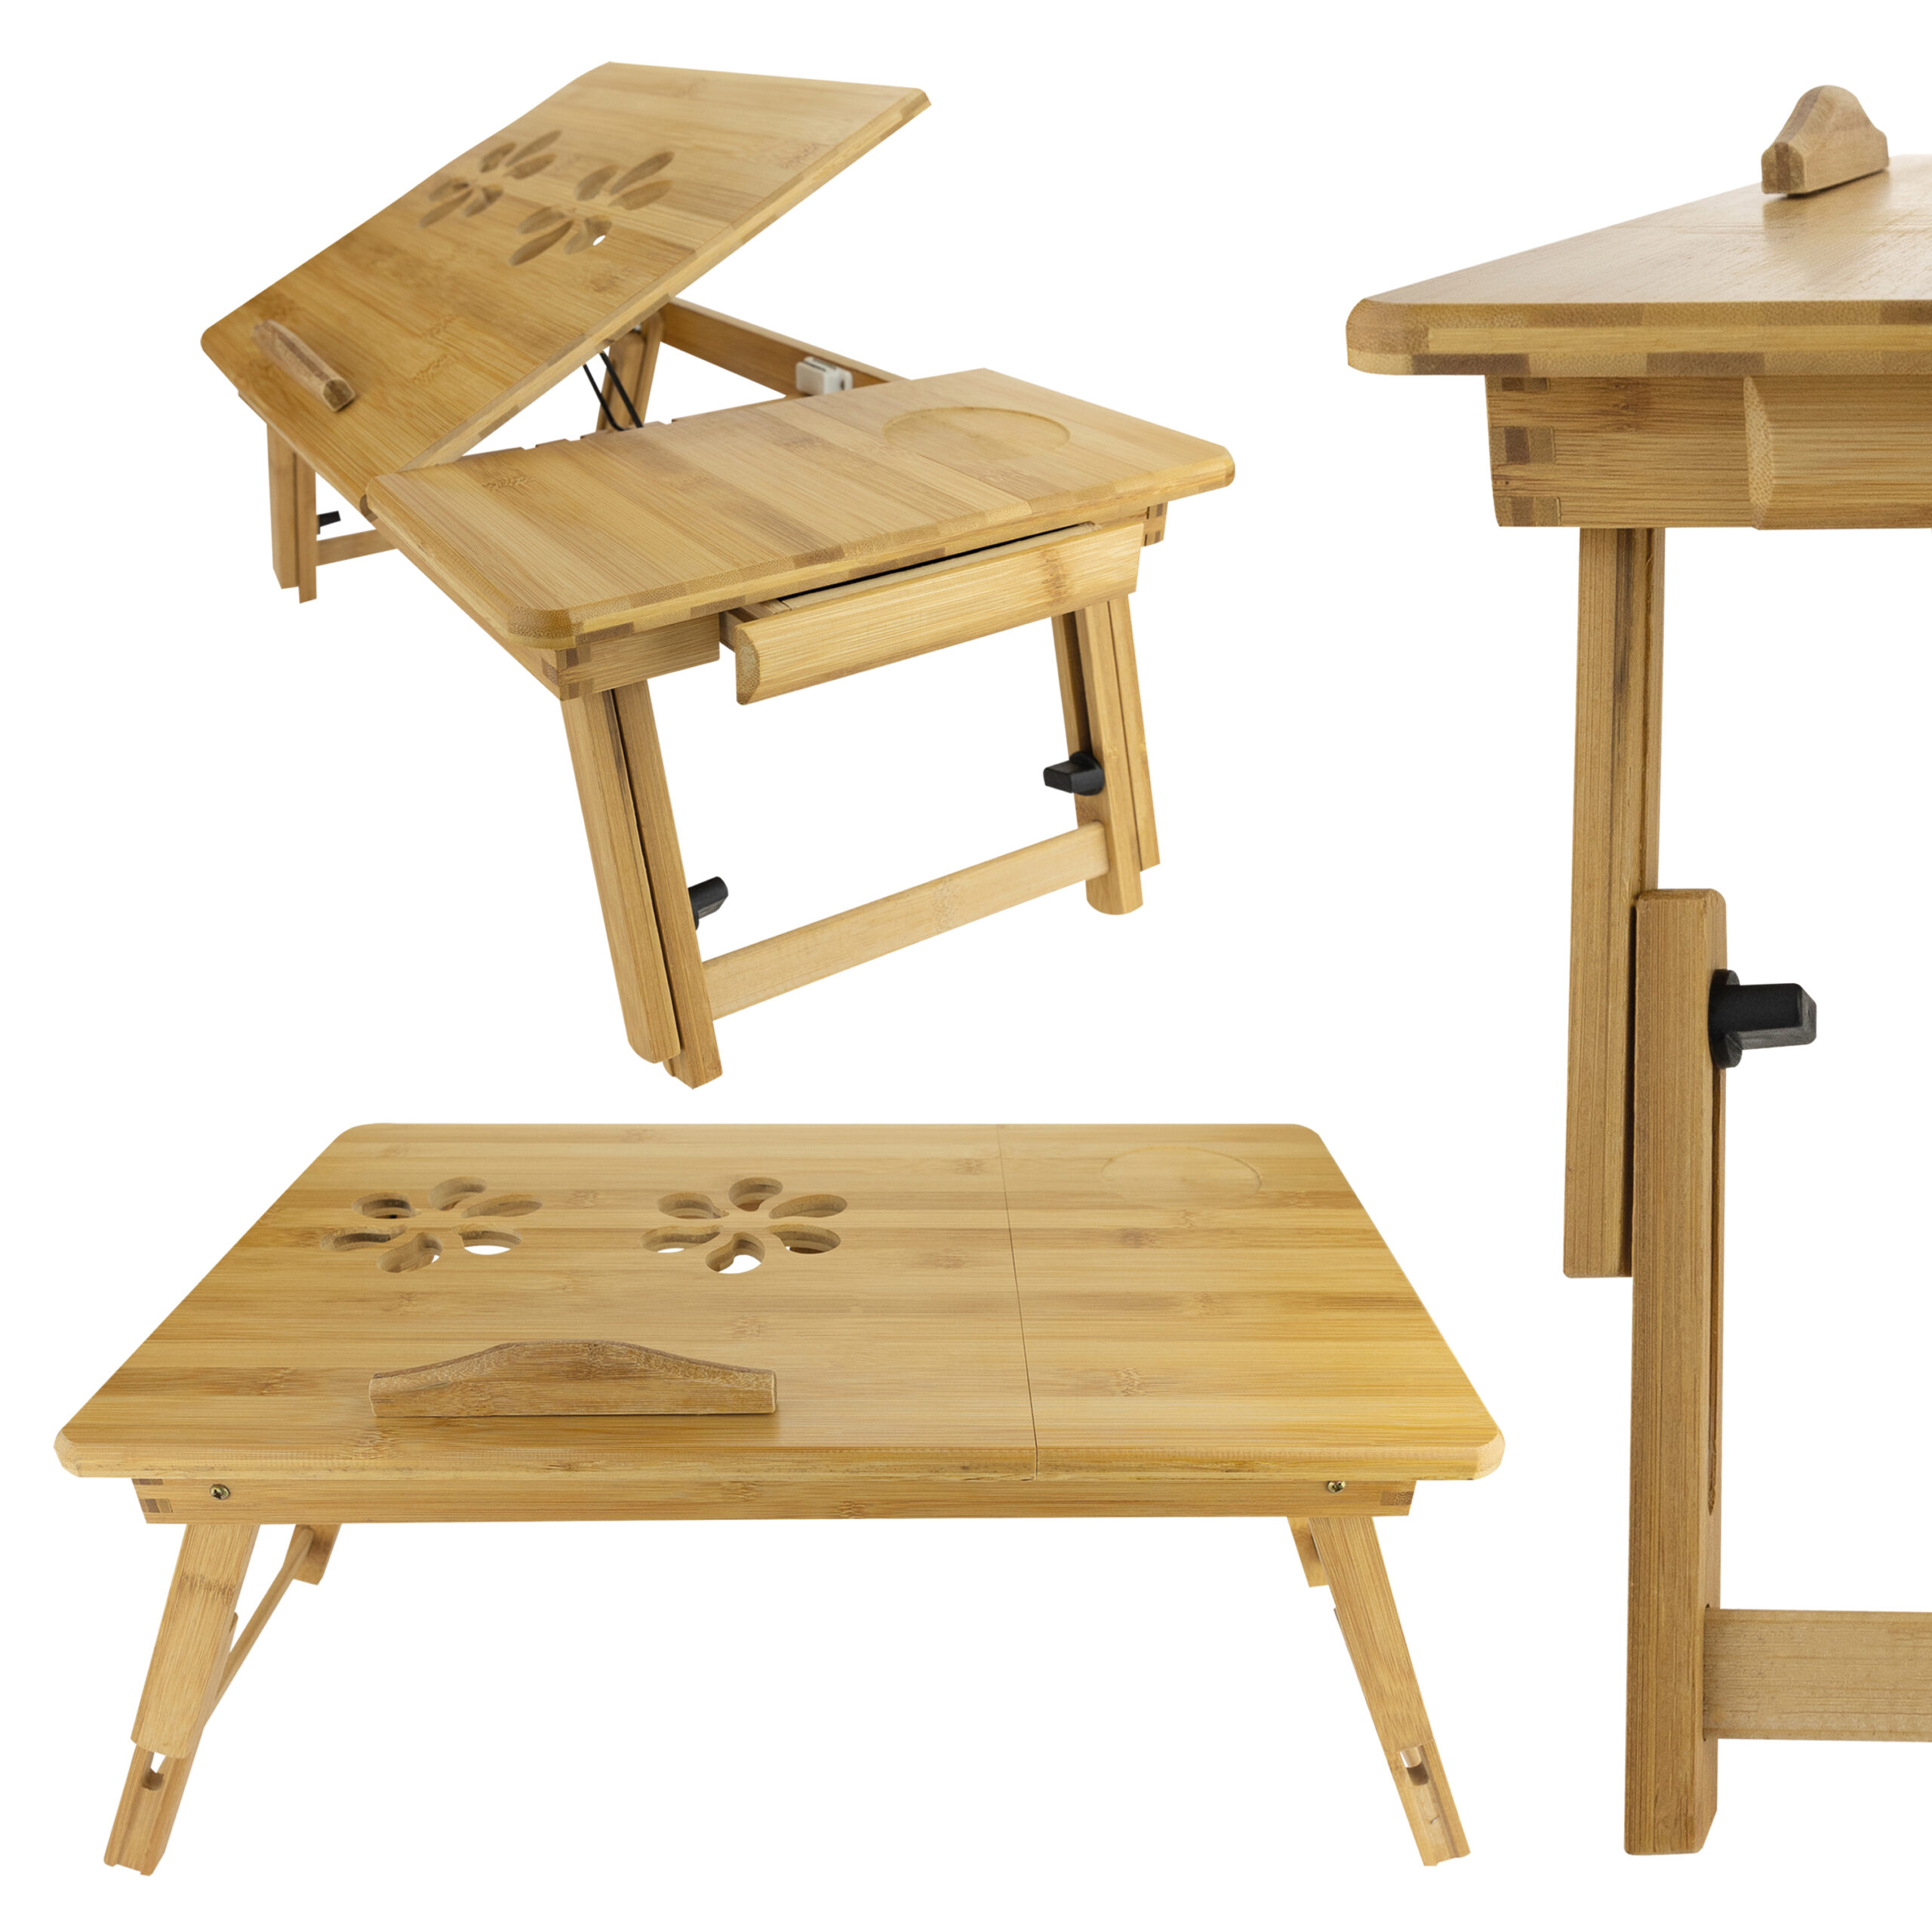 Drewniany składany stolik pod laptopa 7454